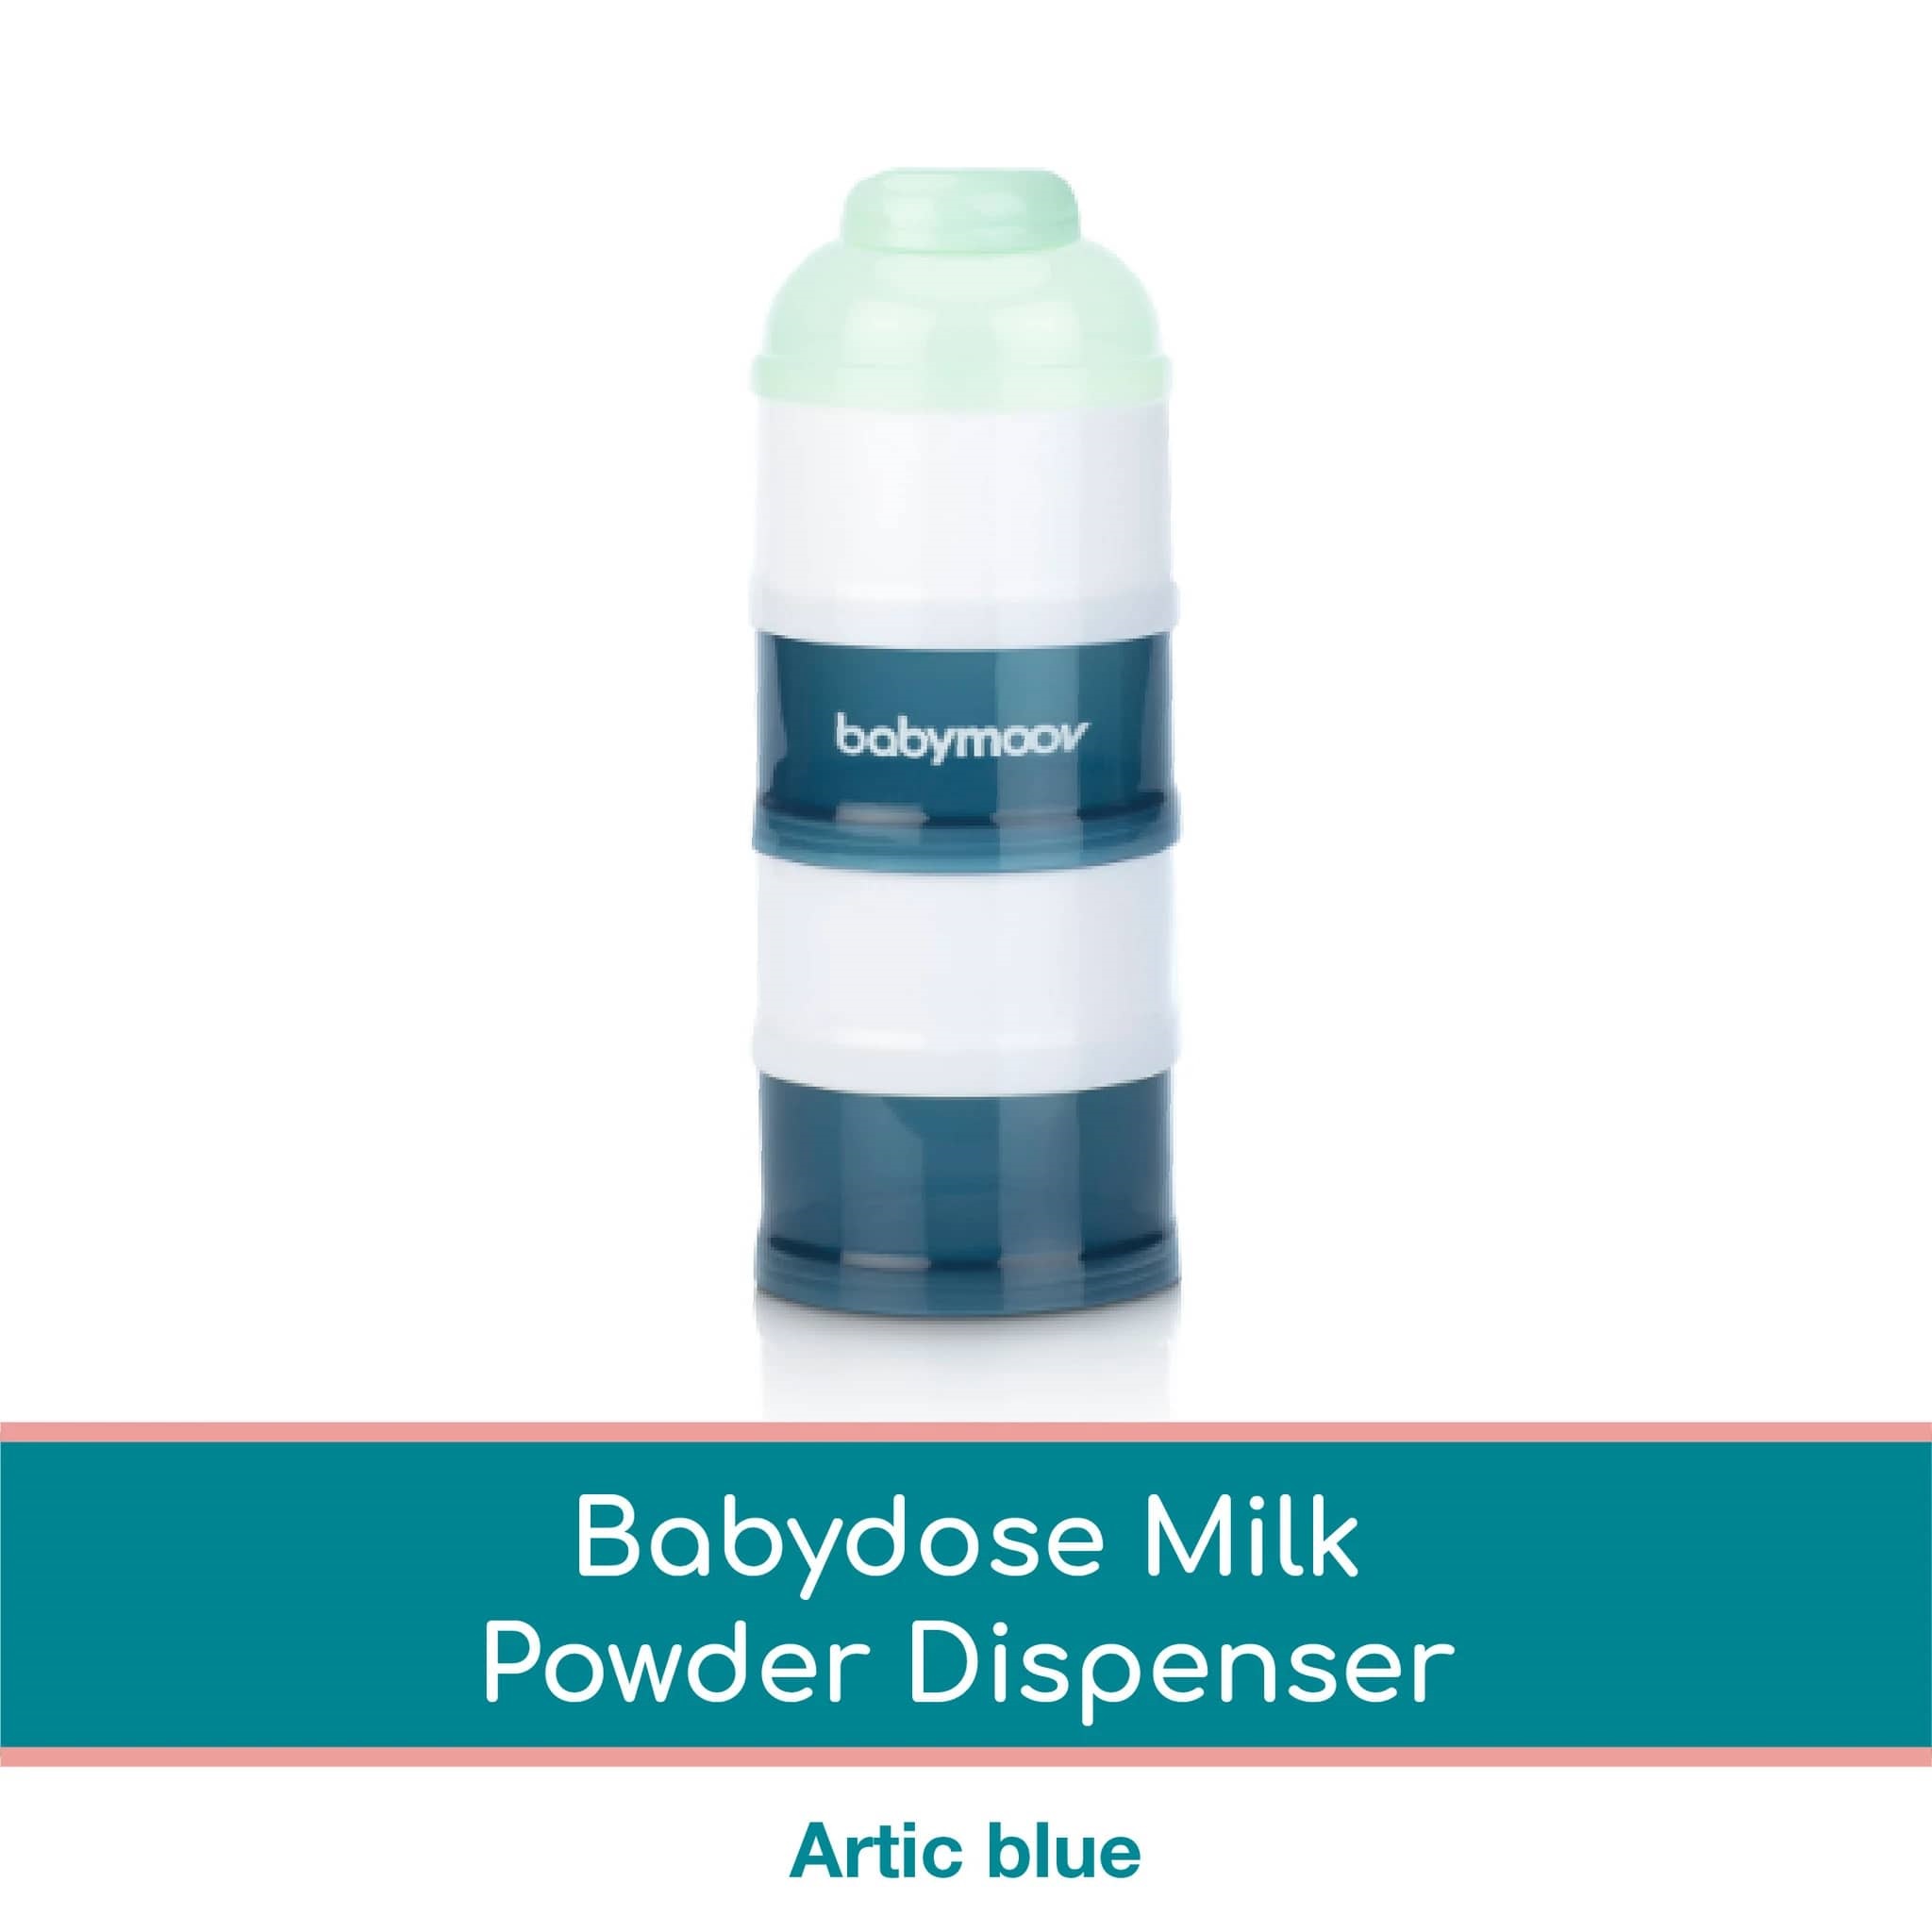 Babymoov Milk Powder Dispenser